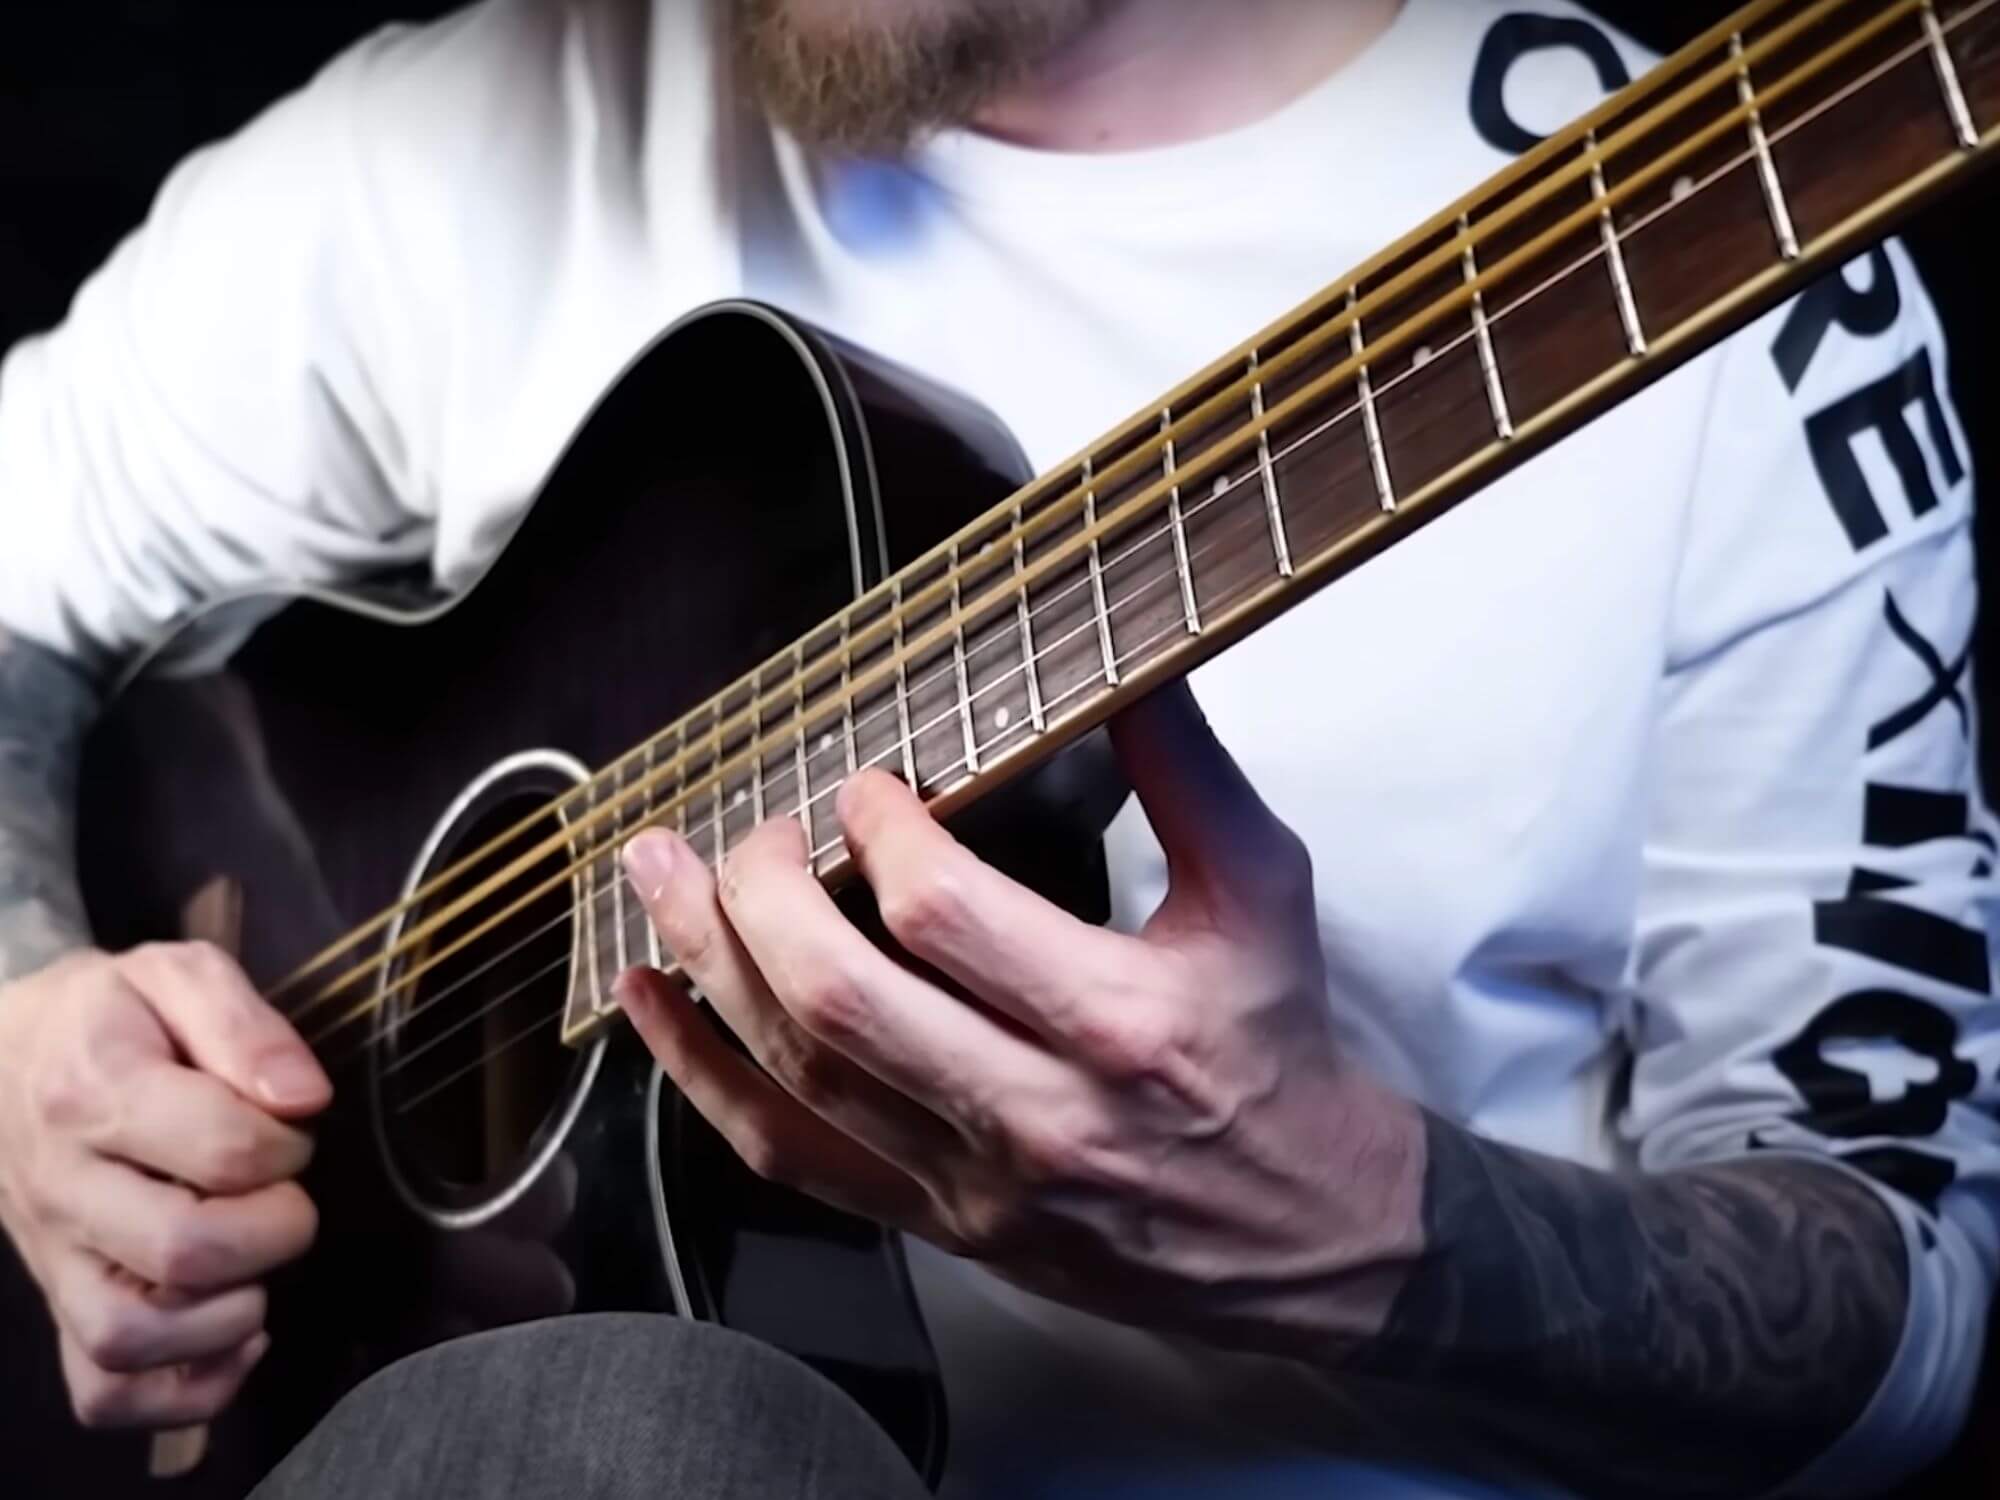 YouTuber Bernth Brodträger demonstrates his rubber band guitar strings